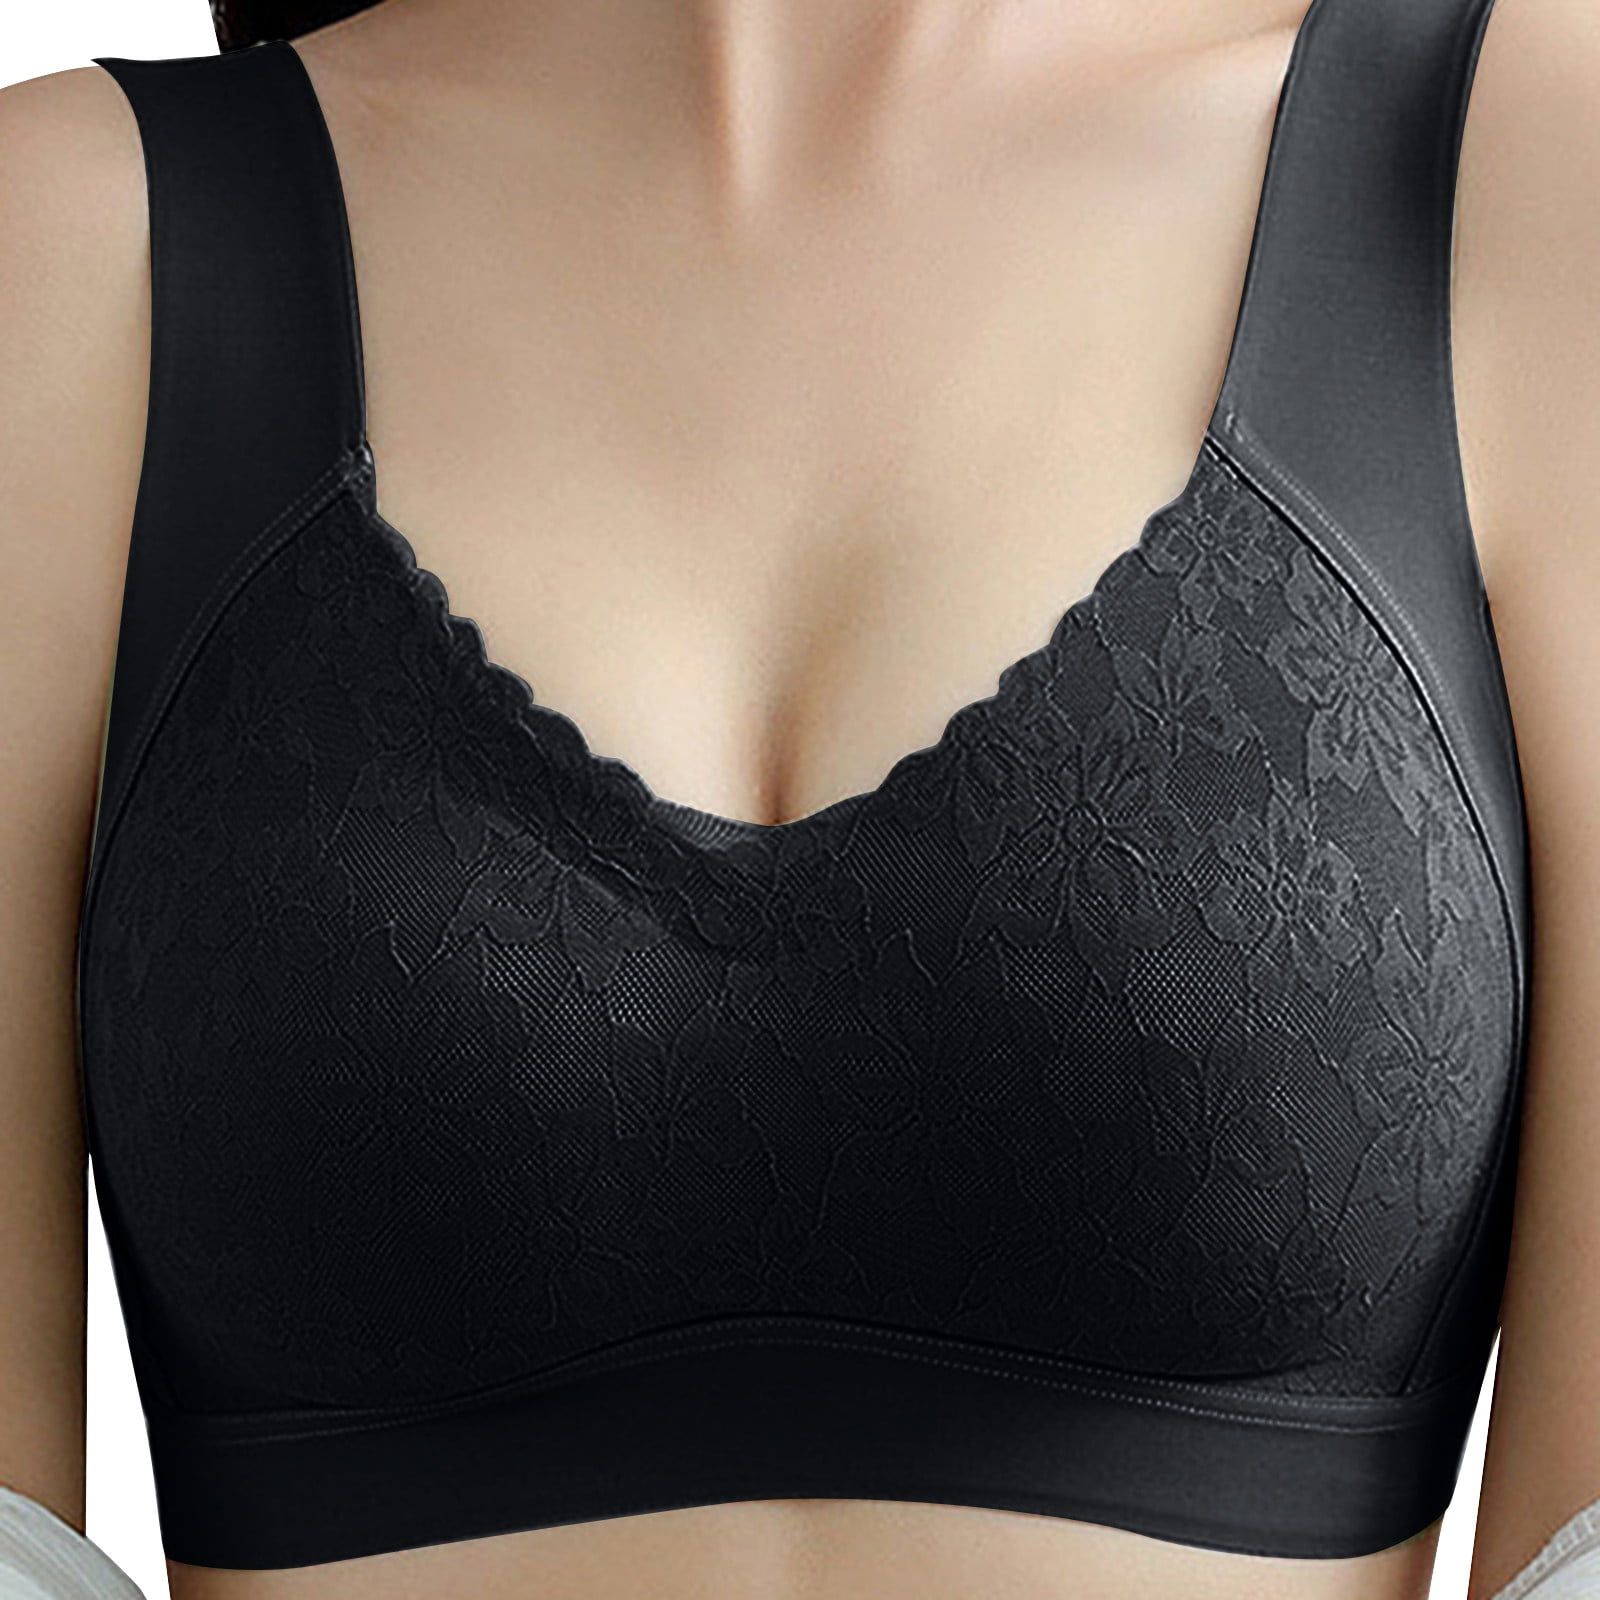 CAICJ98 Sports Bras For Women With String Quick Dry Underwear Bras